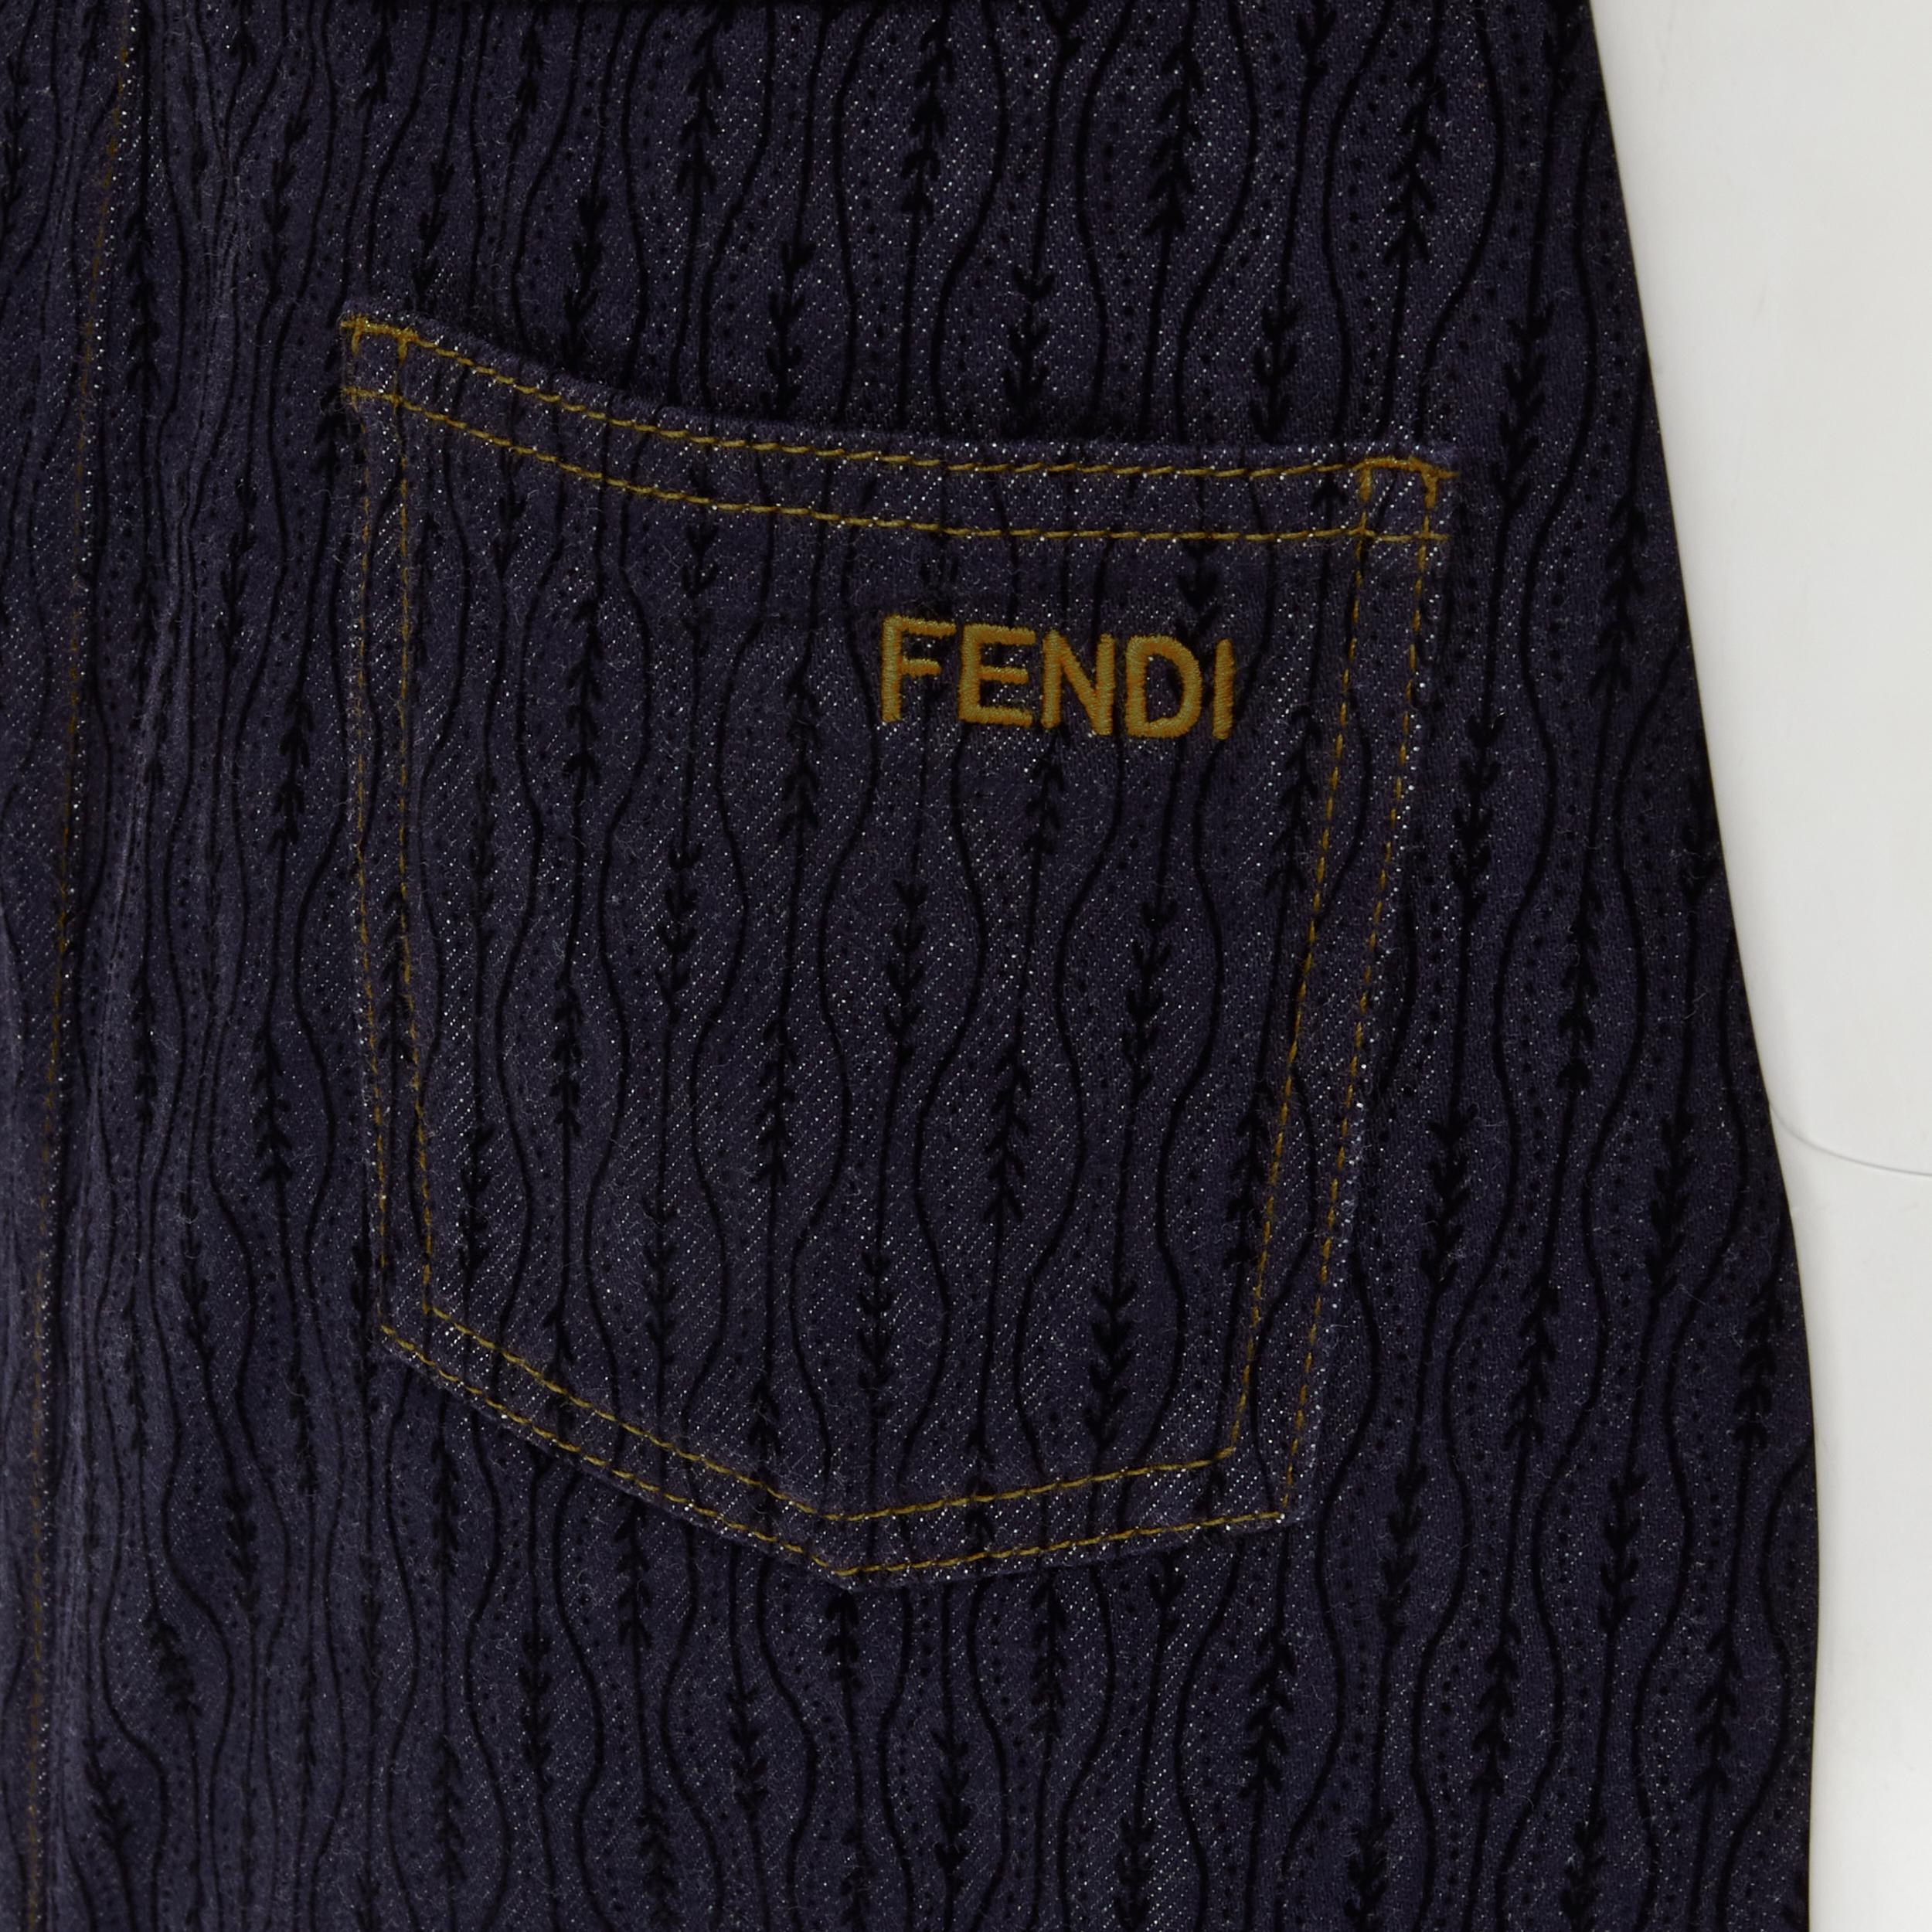 FENDI black graphic flocked velvet indigo denim midi skirt IT42 M
Brand: Fendi
Material: Cotton
Color: Blue
Pattern: Graphic
Closure: Zip
Extra Detail: Graphic velvet flocking on denim-cotton. Side zip closure. Fendi logo embroidery at back patch